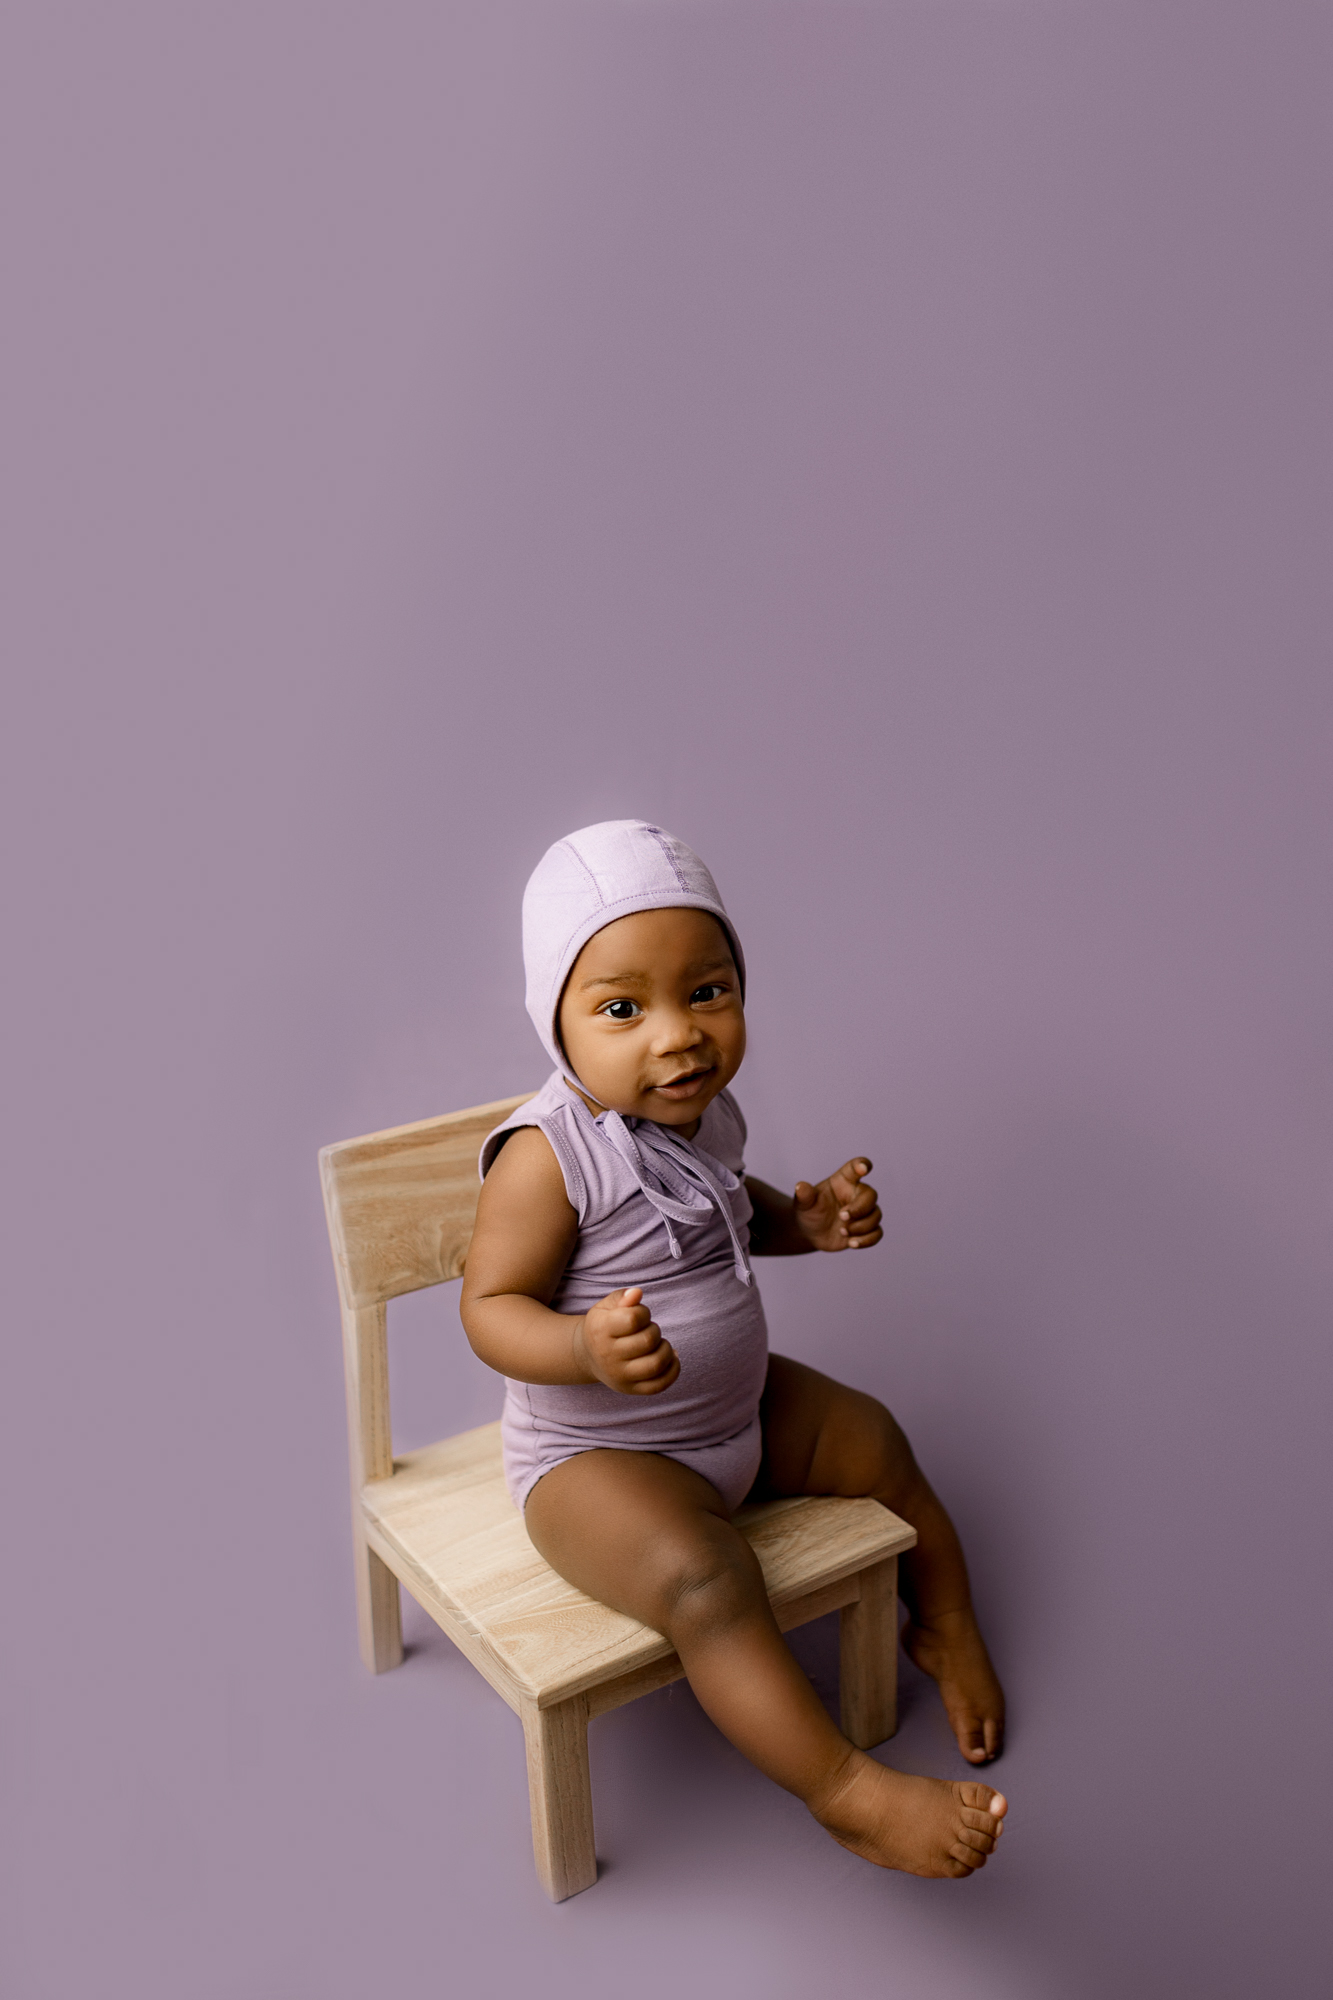 atlanta pediatrician baby in purple during portrat session